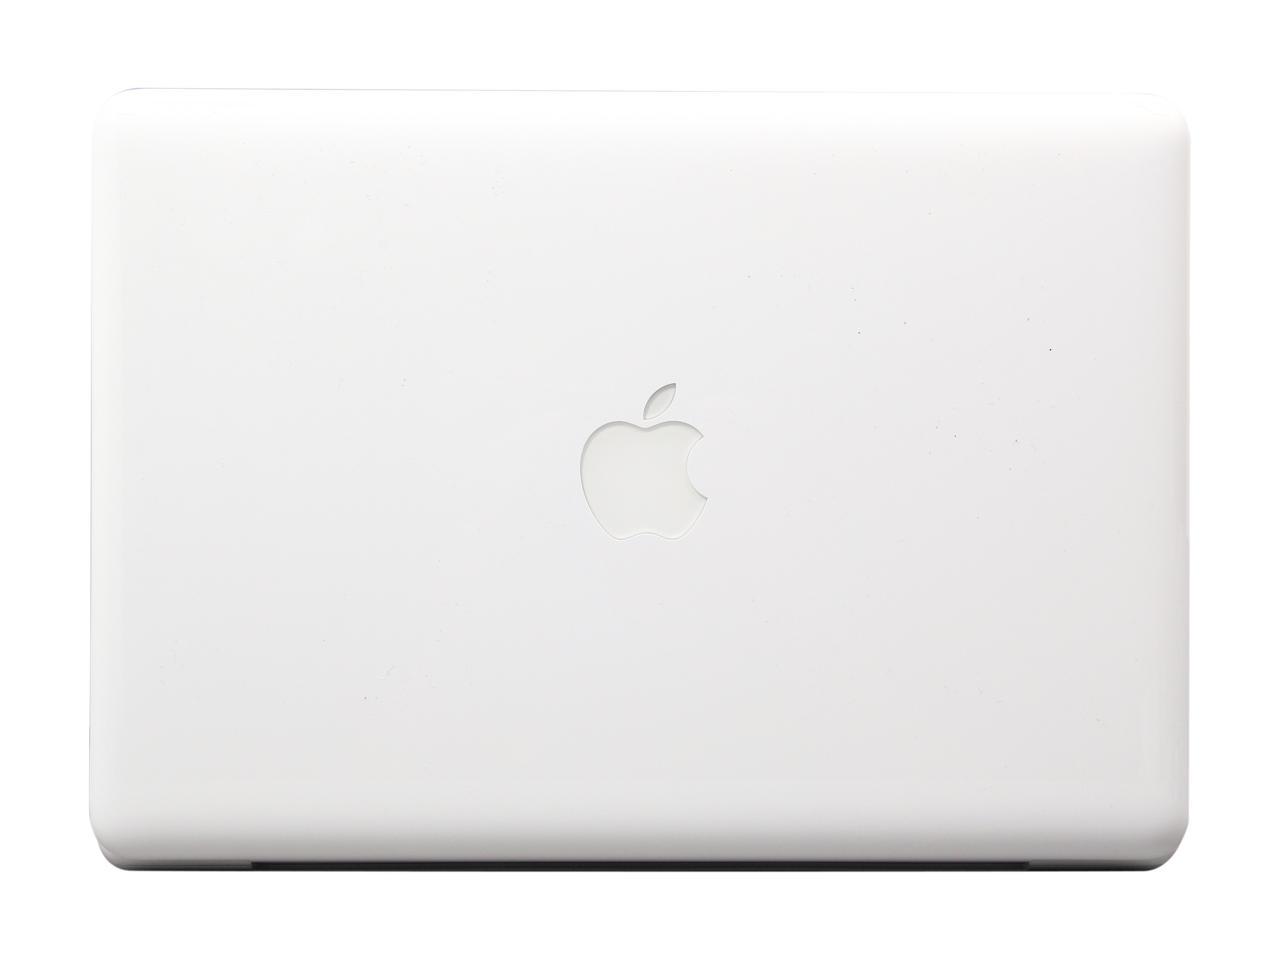 apple-mid-2010-13.3-inch-macbook-a1342-white-c2d - 2.4ghz processor, 4gb ram, 320m - 256mb gpu-mc516ll/a-3